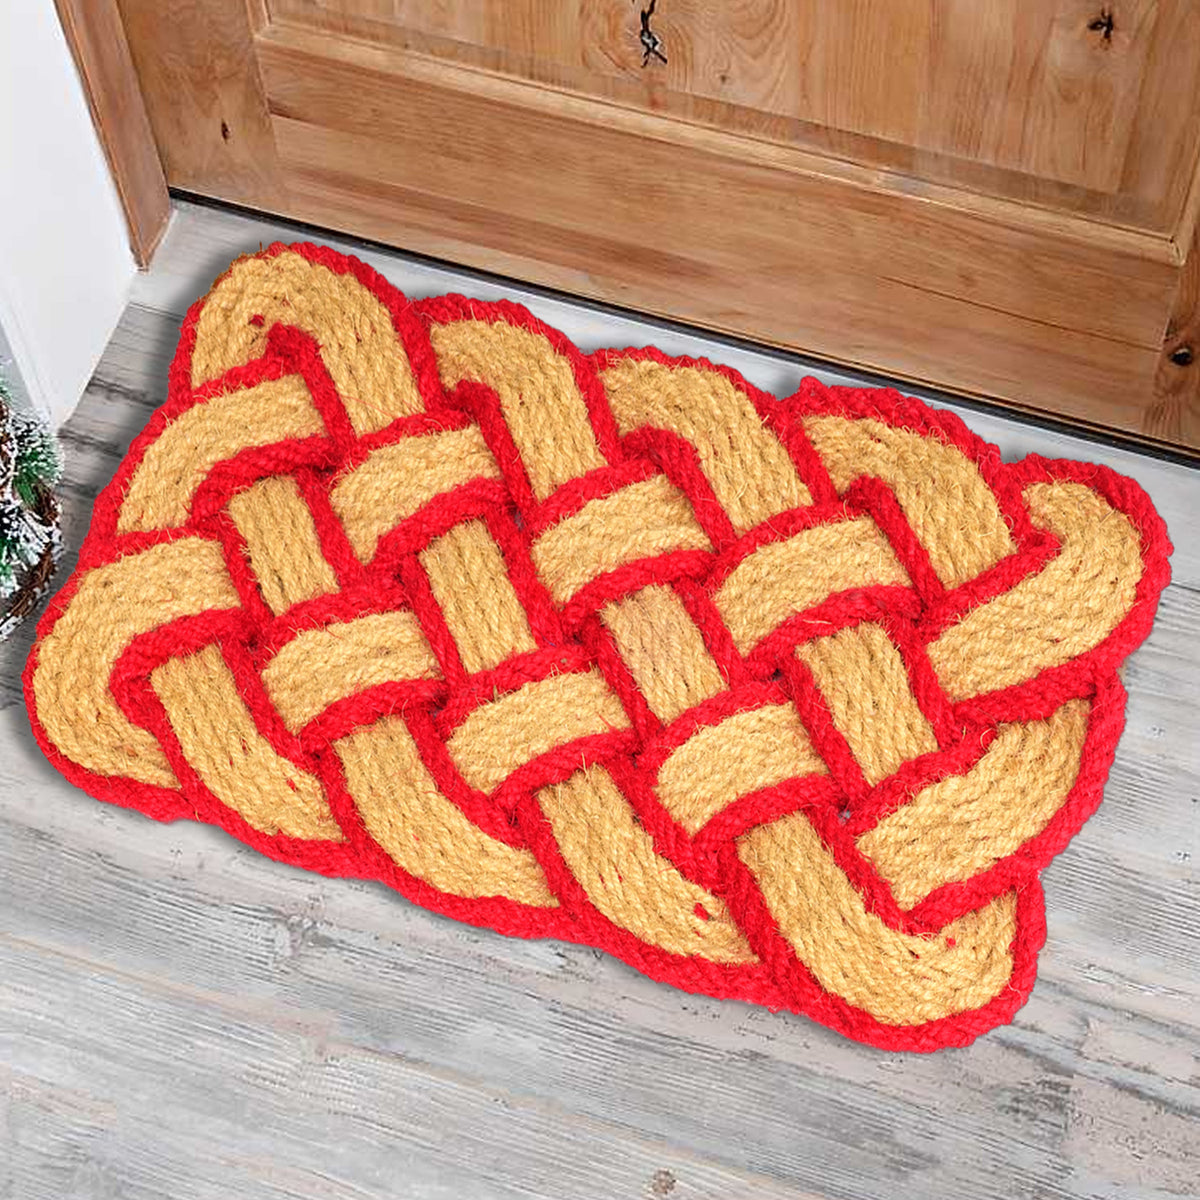 OnlyMat Red Border Lovers Knot - 100% Natural Handloom Coir Mat - Indoor / Outdoor